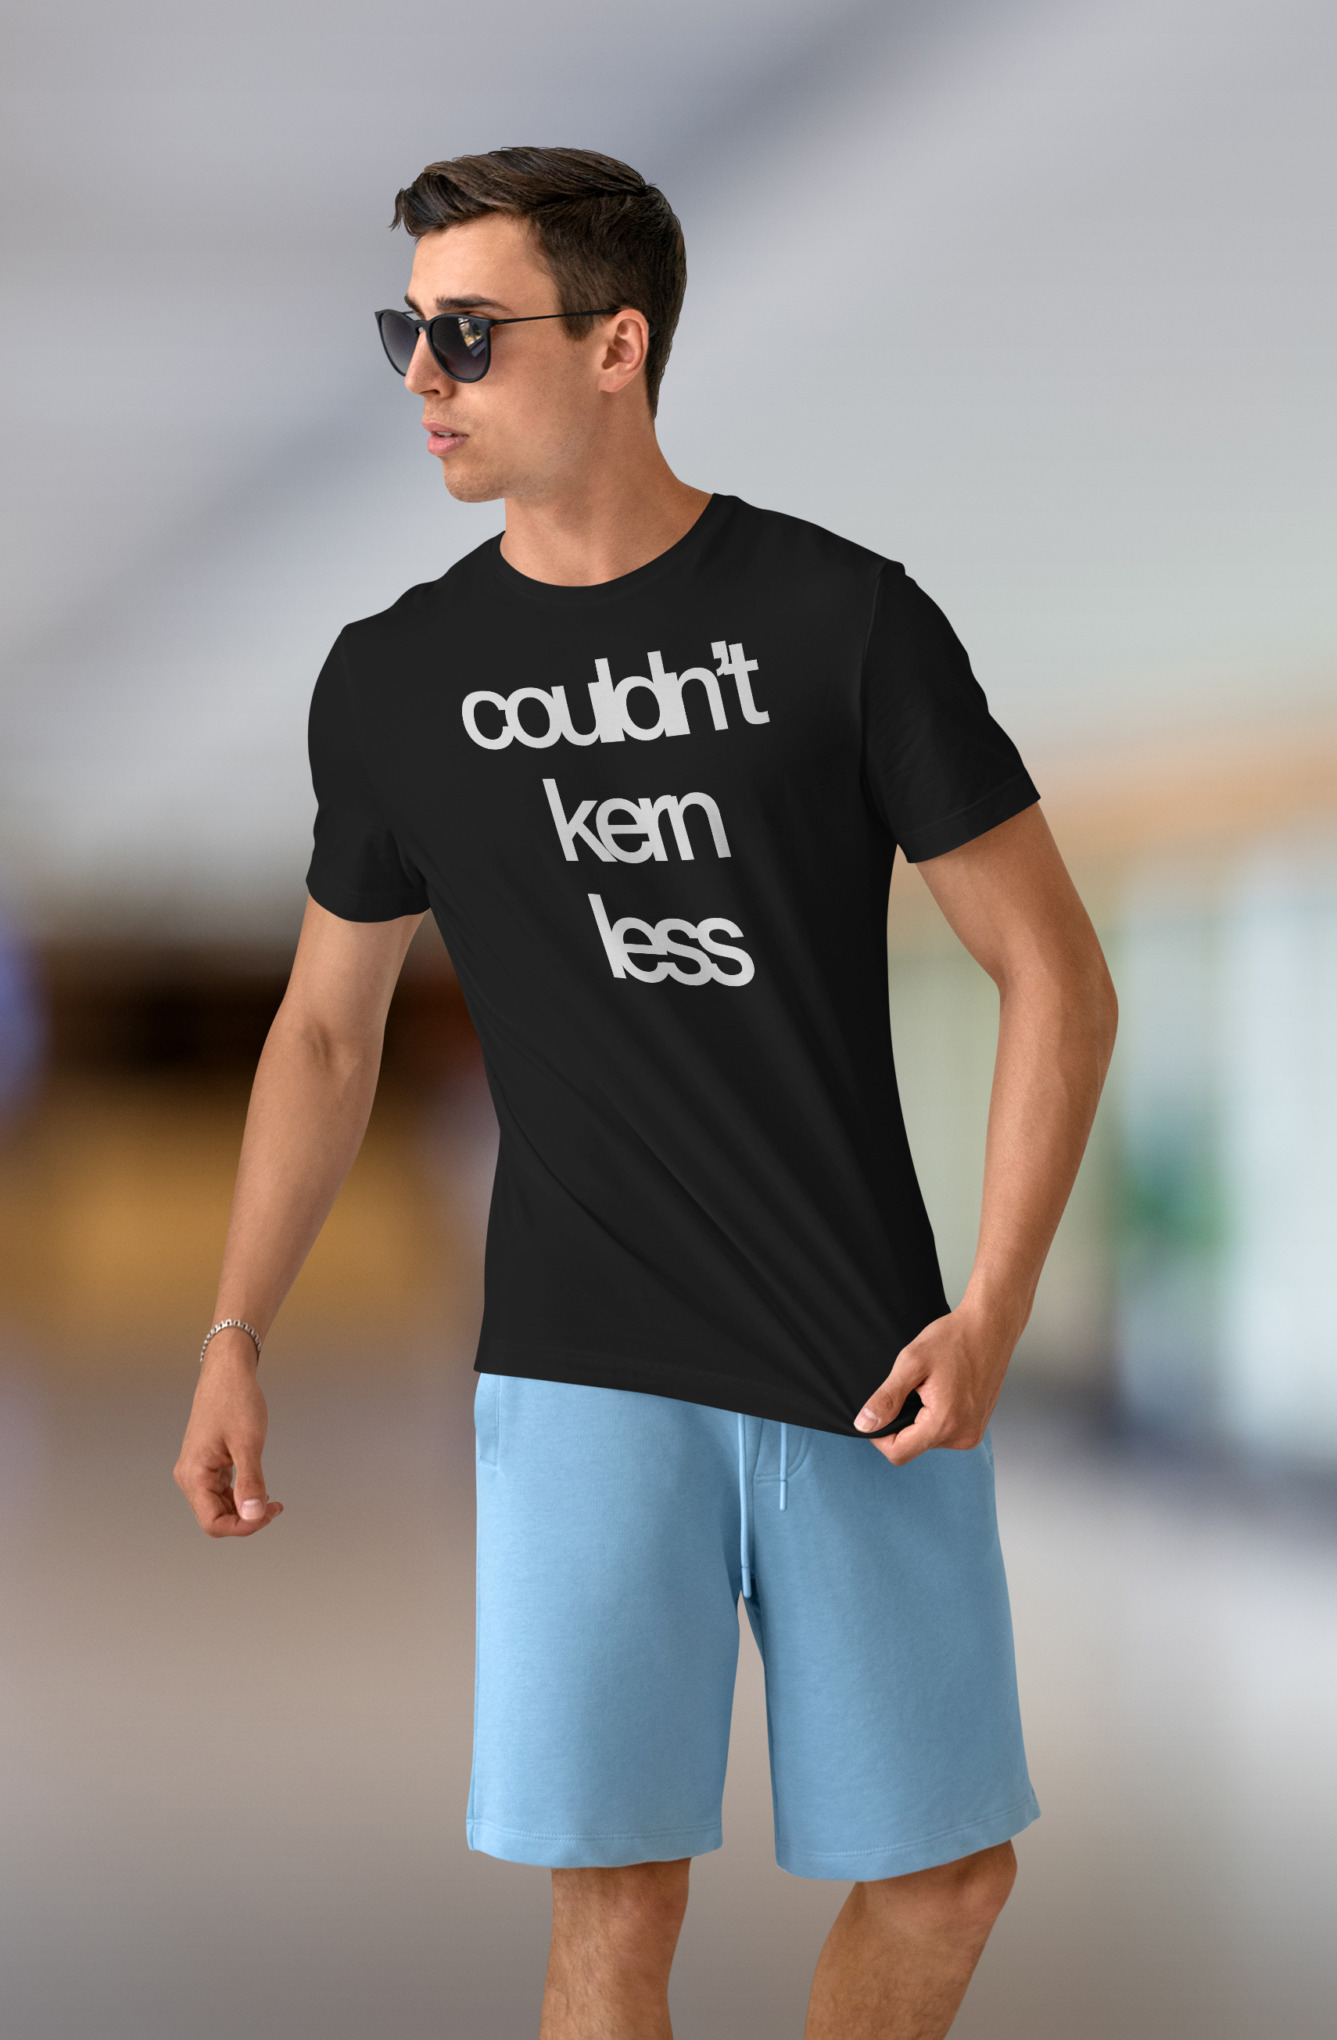 Couldn't Kern Less T-Shirt